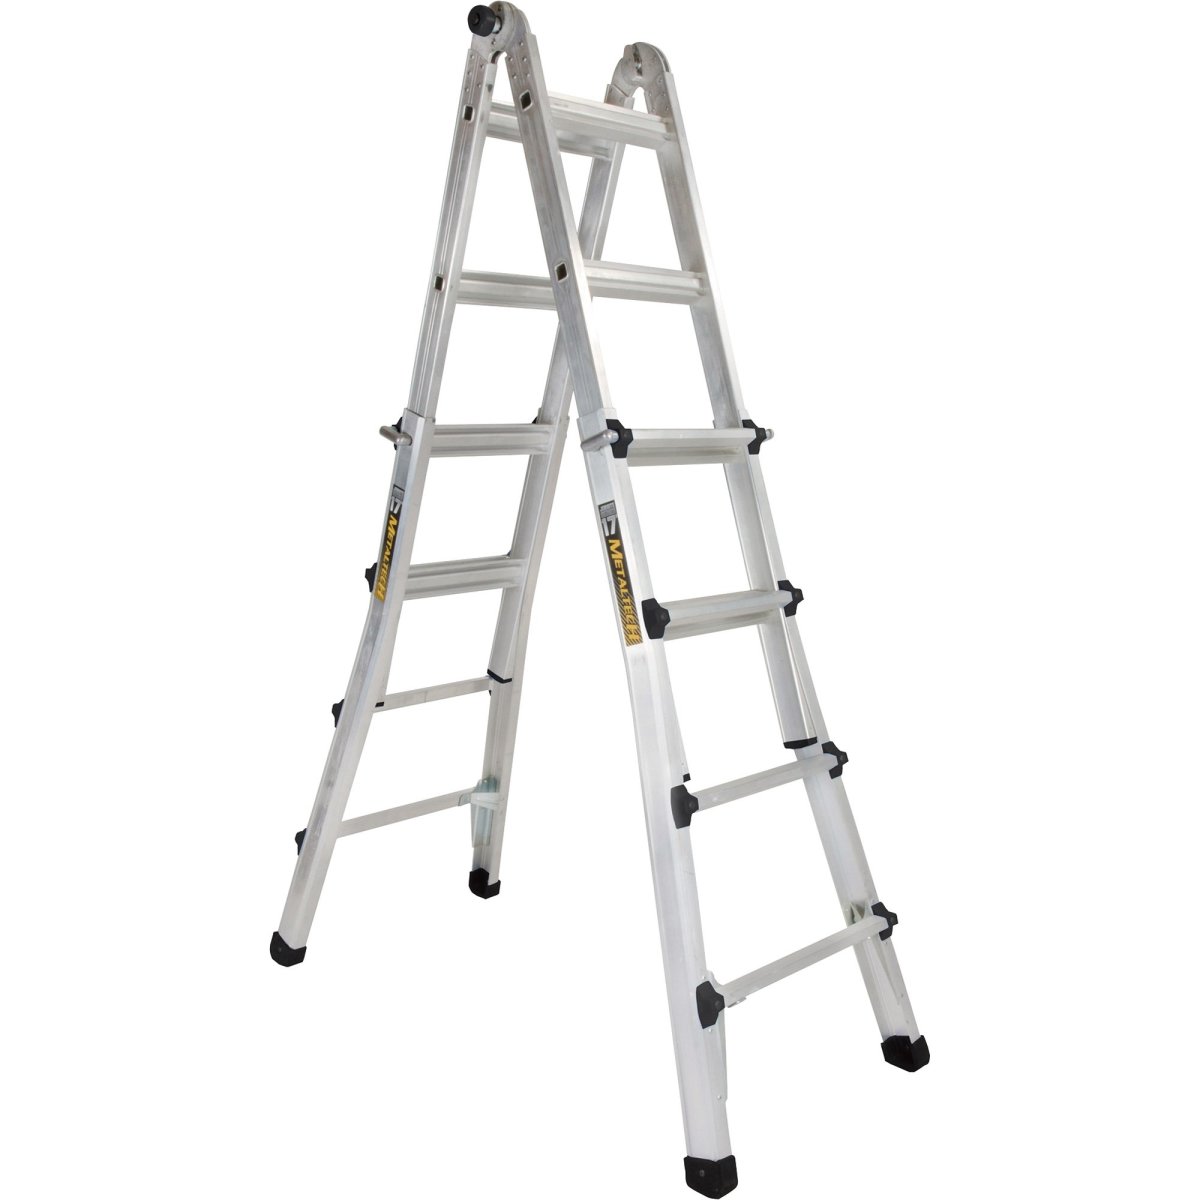 Climbing an Endless Ladder to the Top